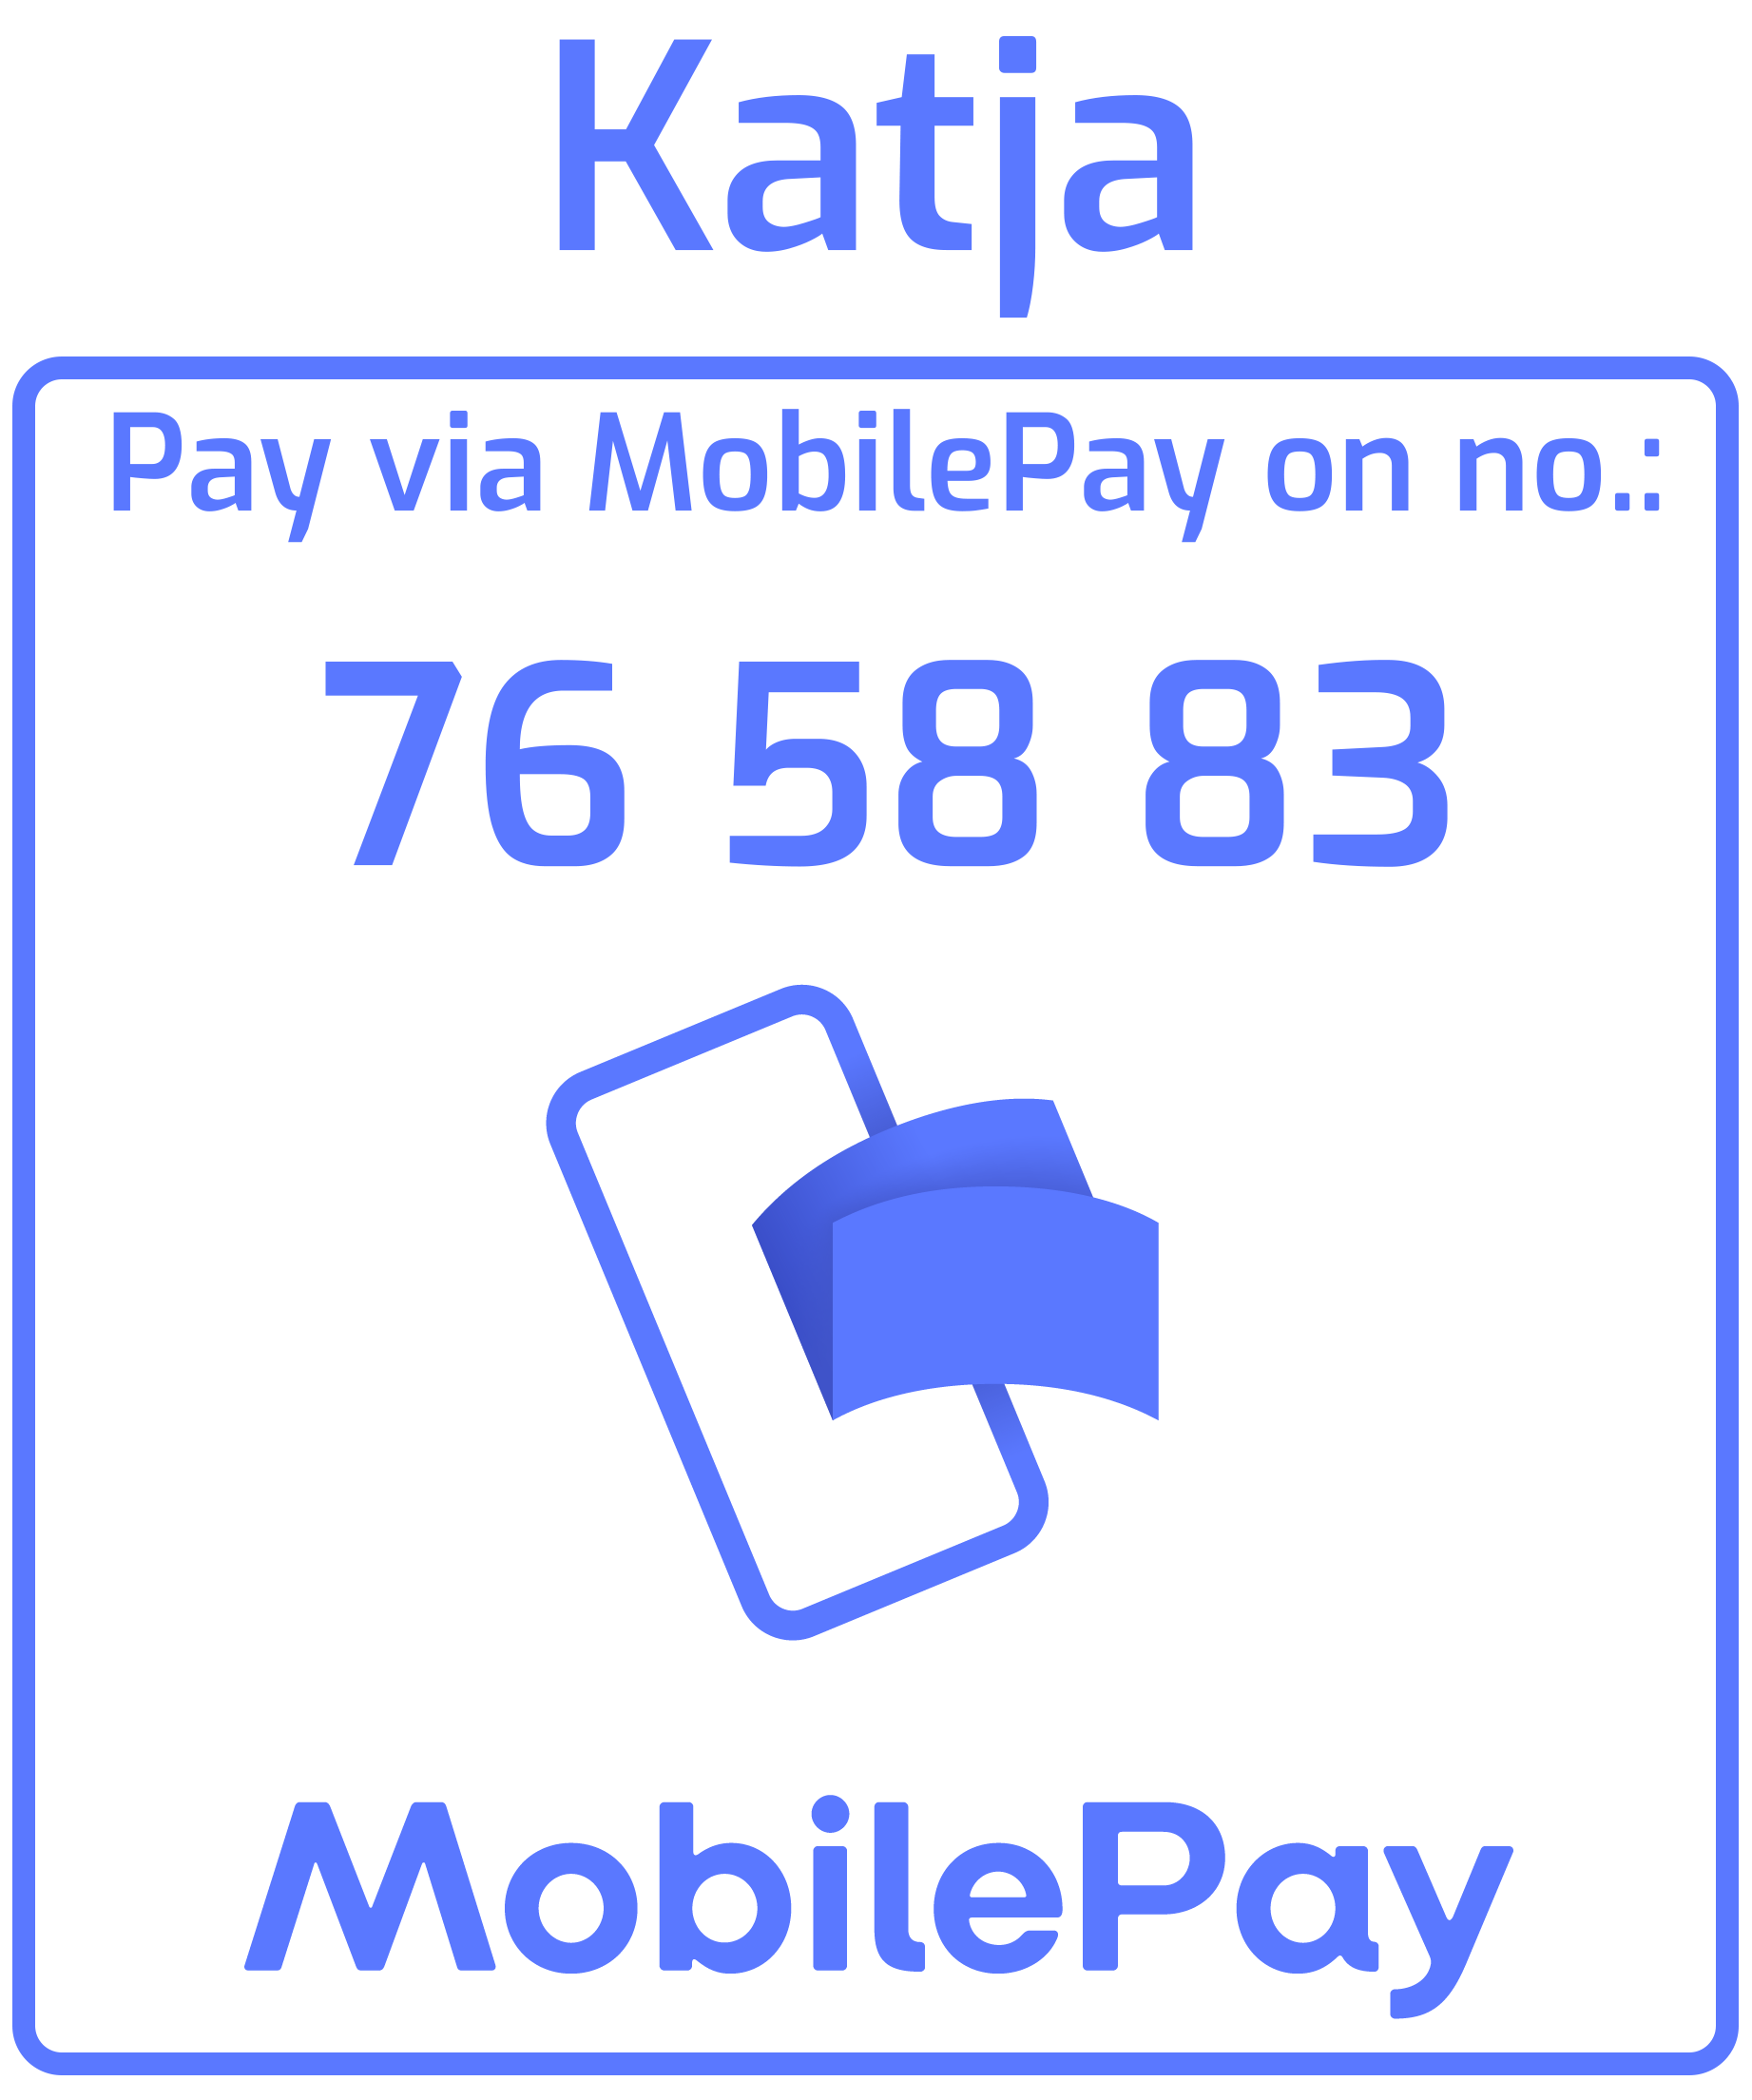 MobilePay Logo with number Katja